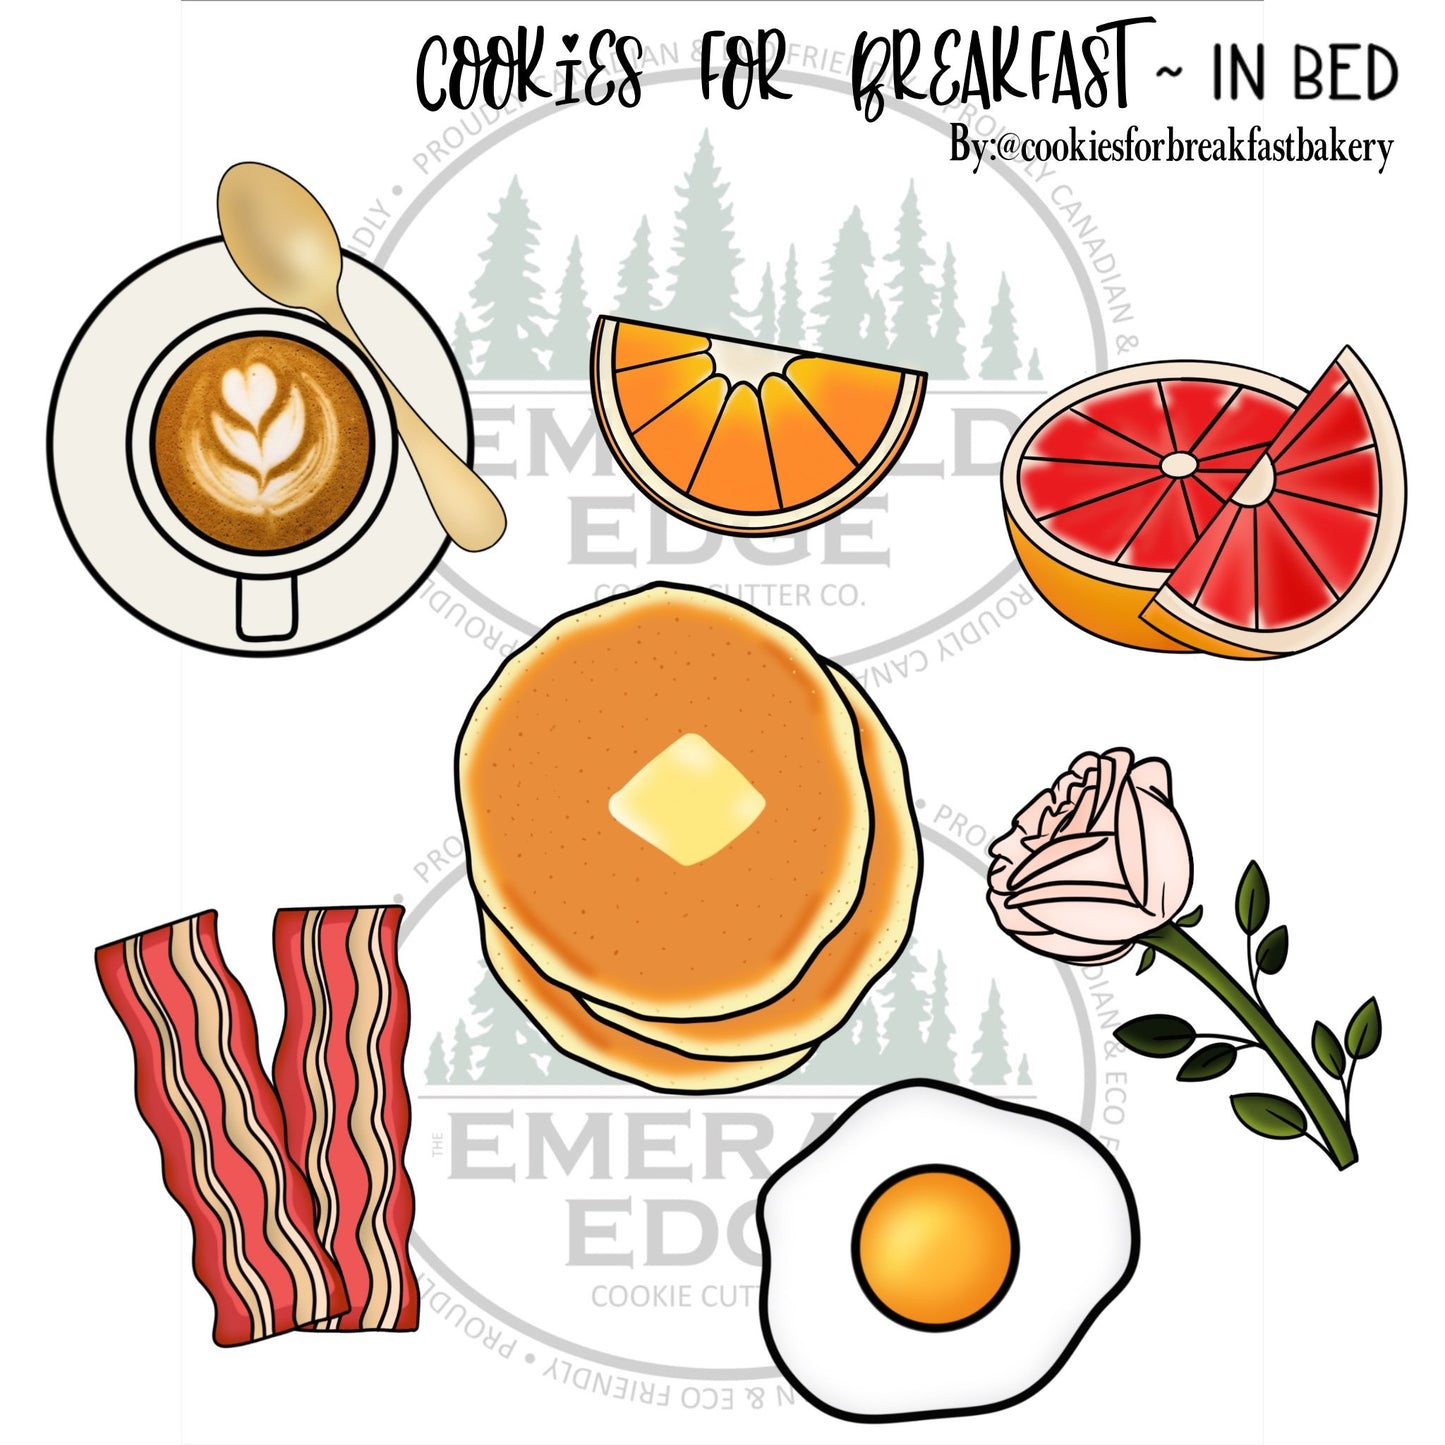 Cookies For Breakfast-In Bed ~ Bacon